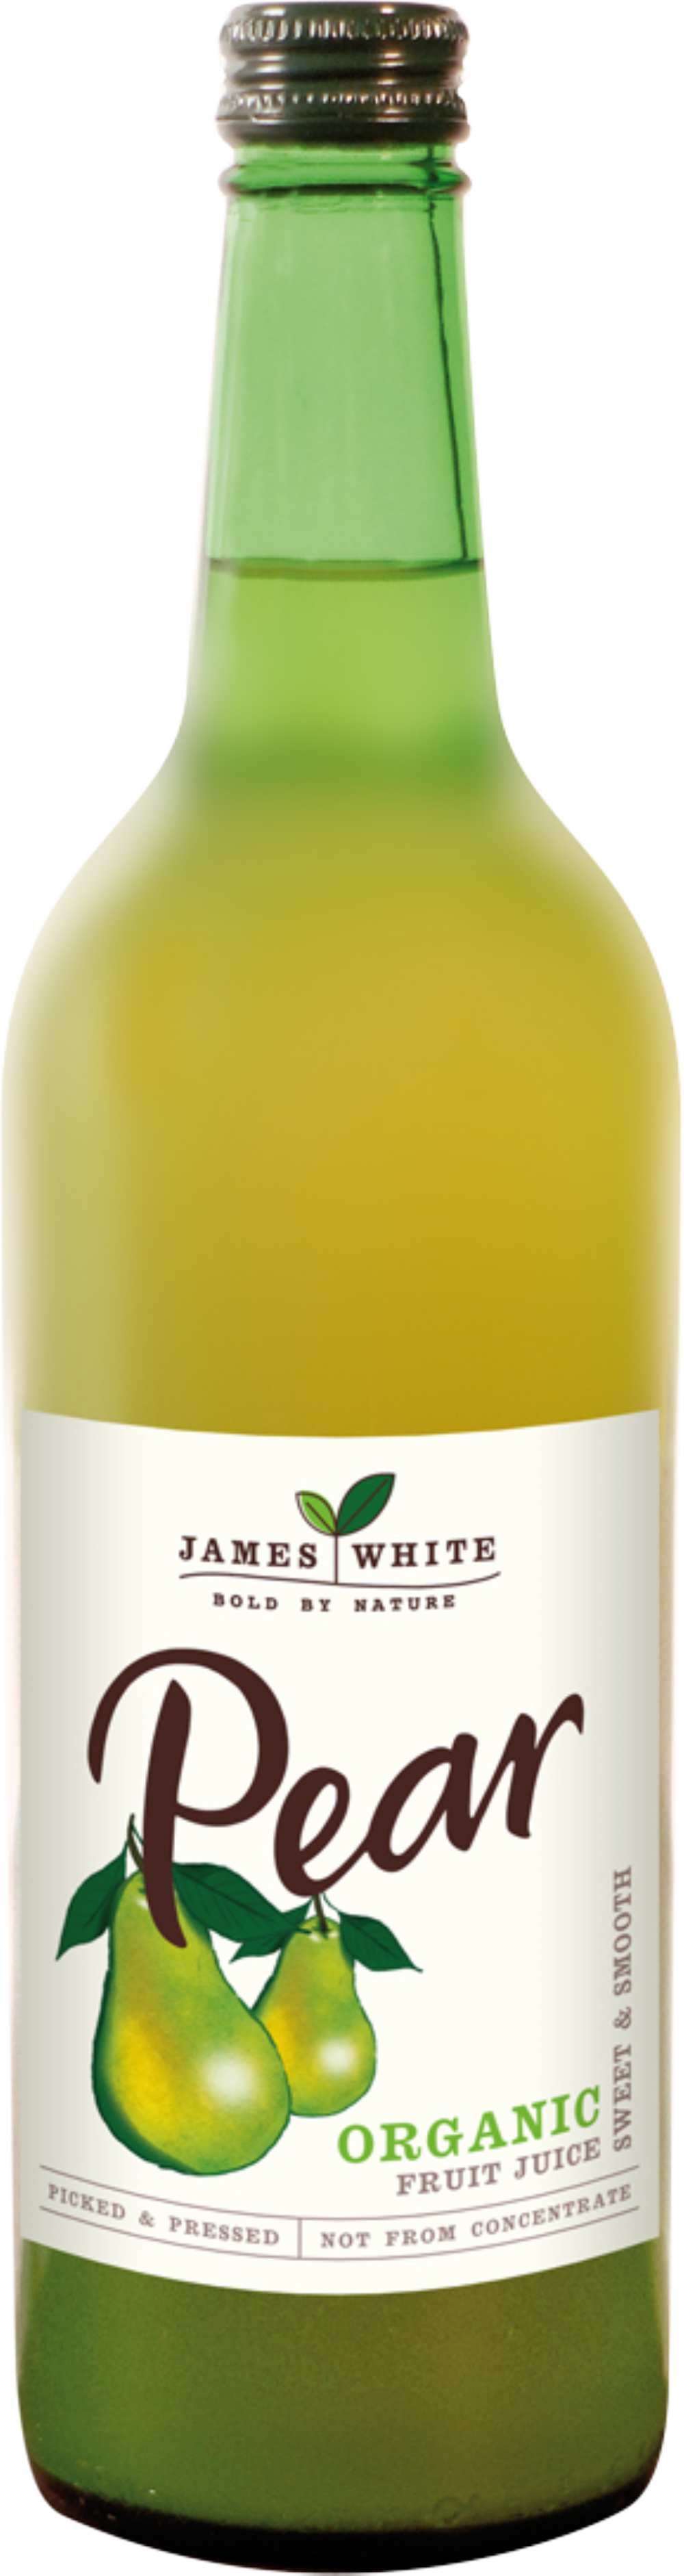 JAMES WHITE Organic Pear Juice 75cl